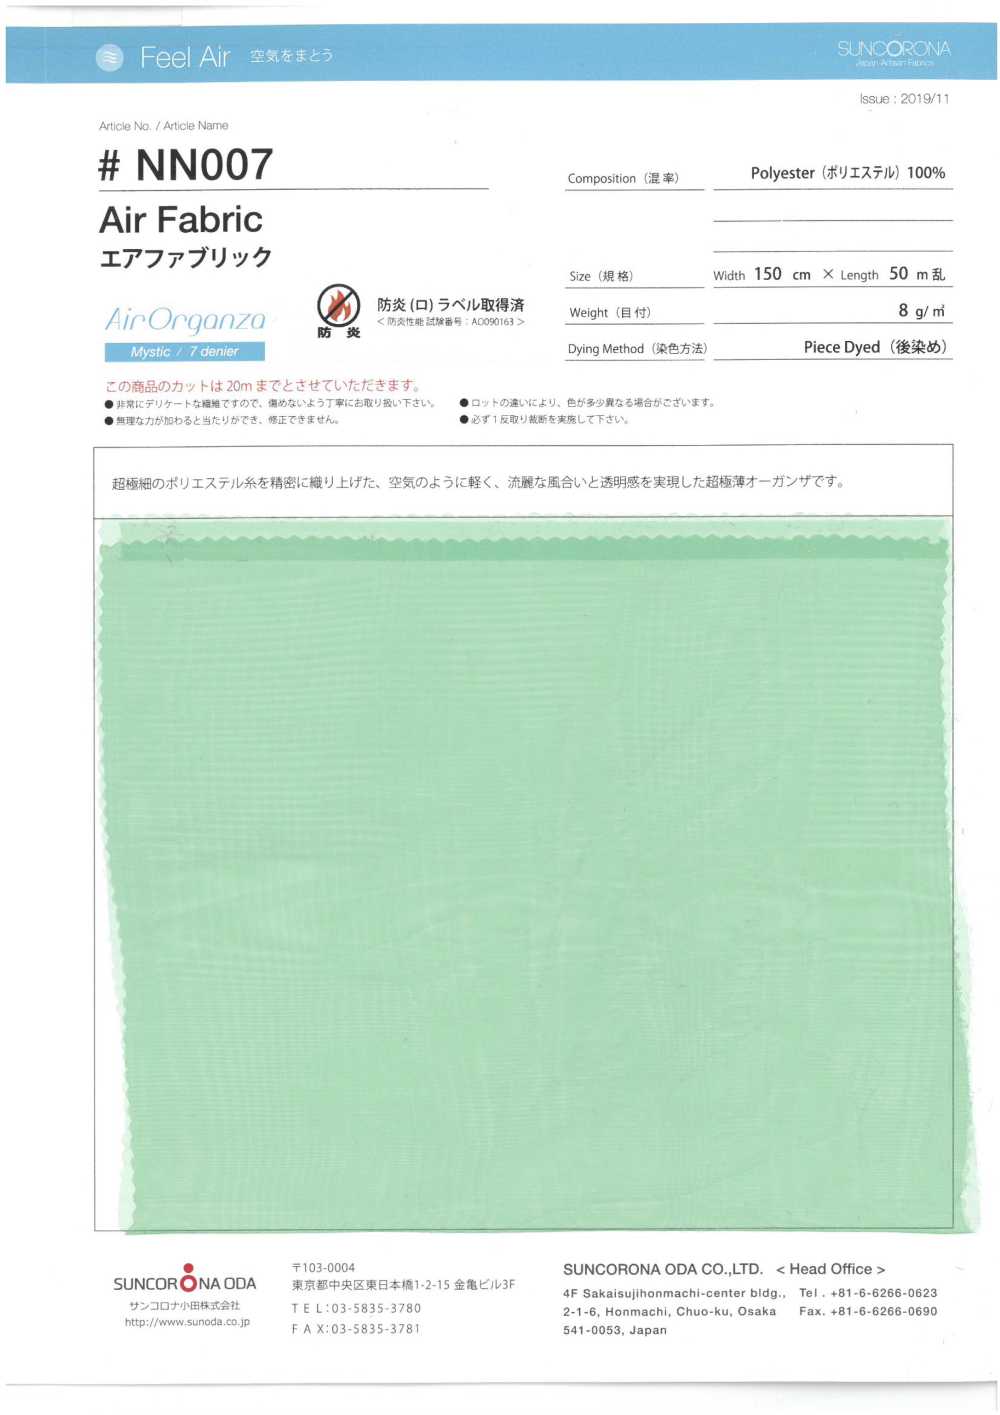 NN-007 Air Fabric[Textile / Fabric] Suncorona Oda